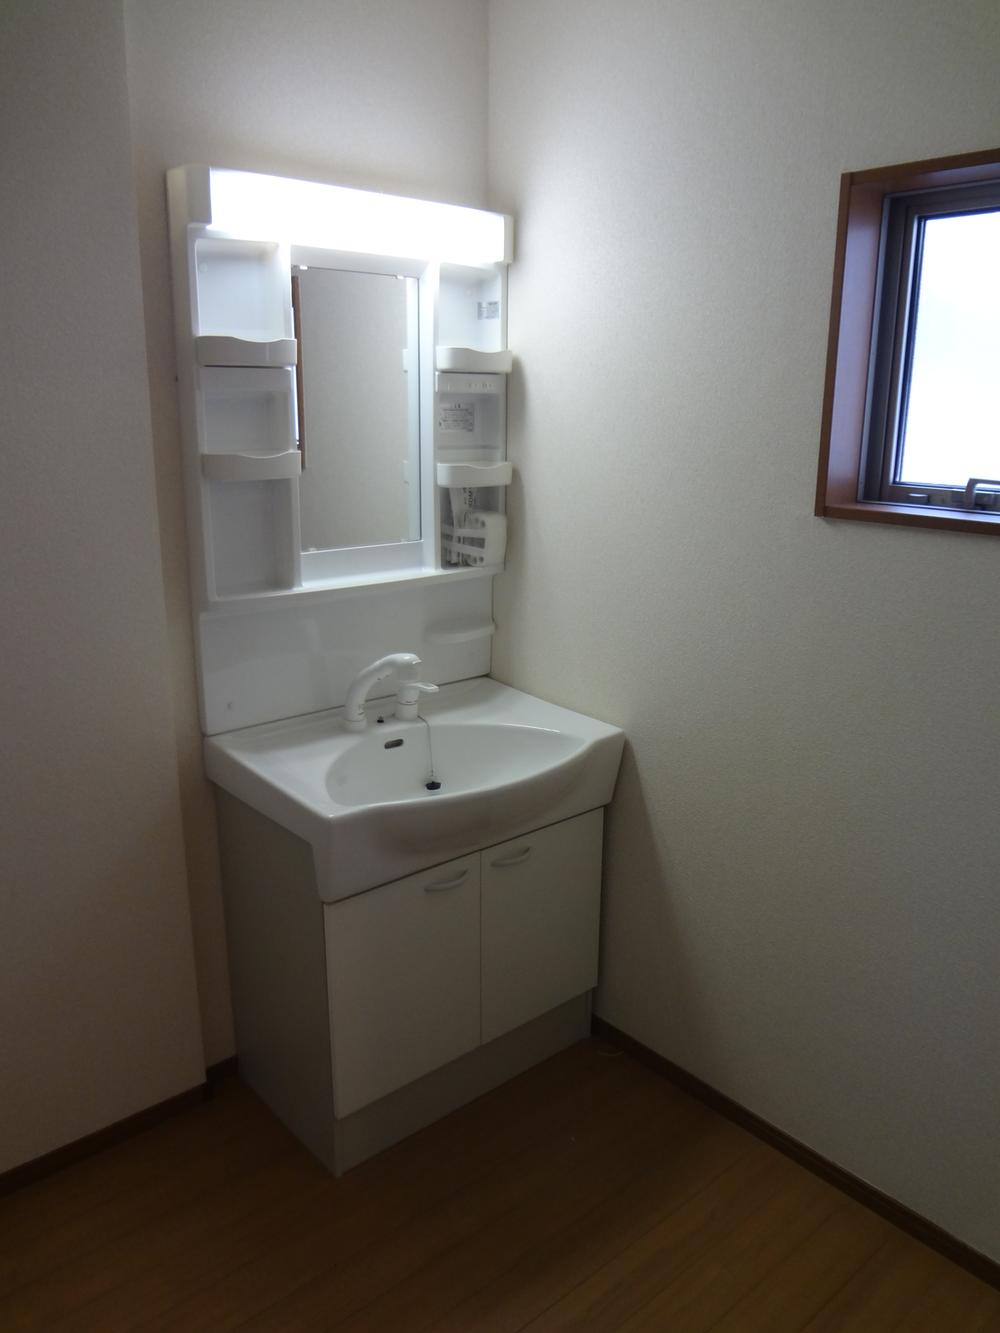 Wash basin, toilet. Building 2 washstand enforcement example photo